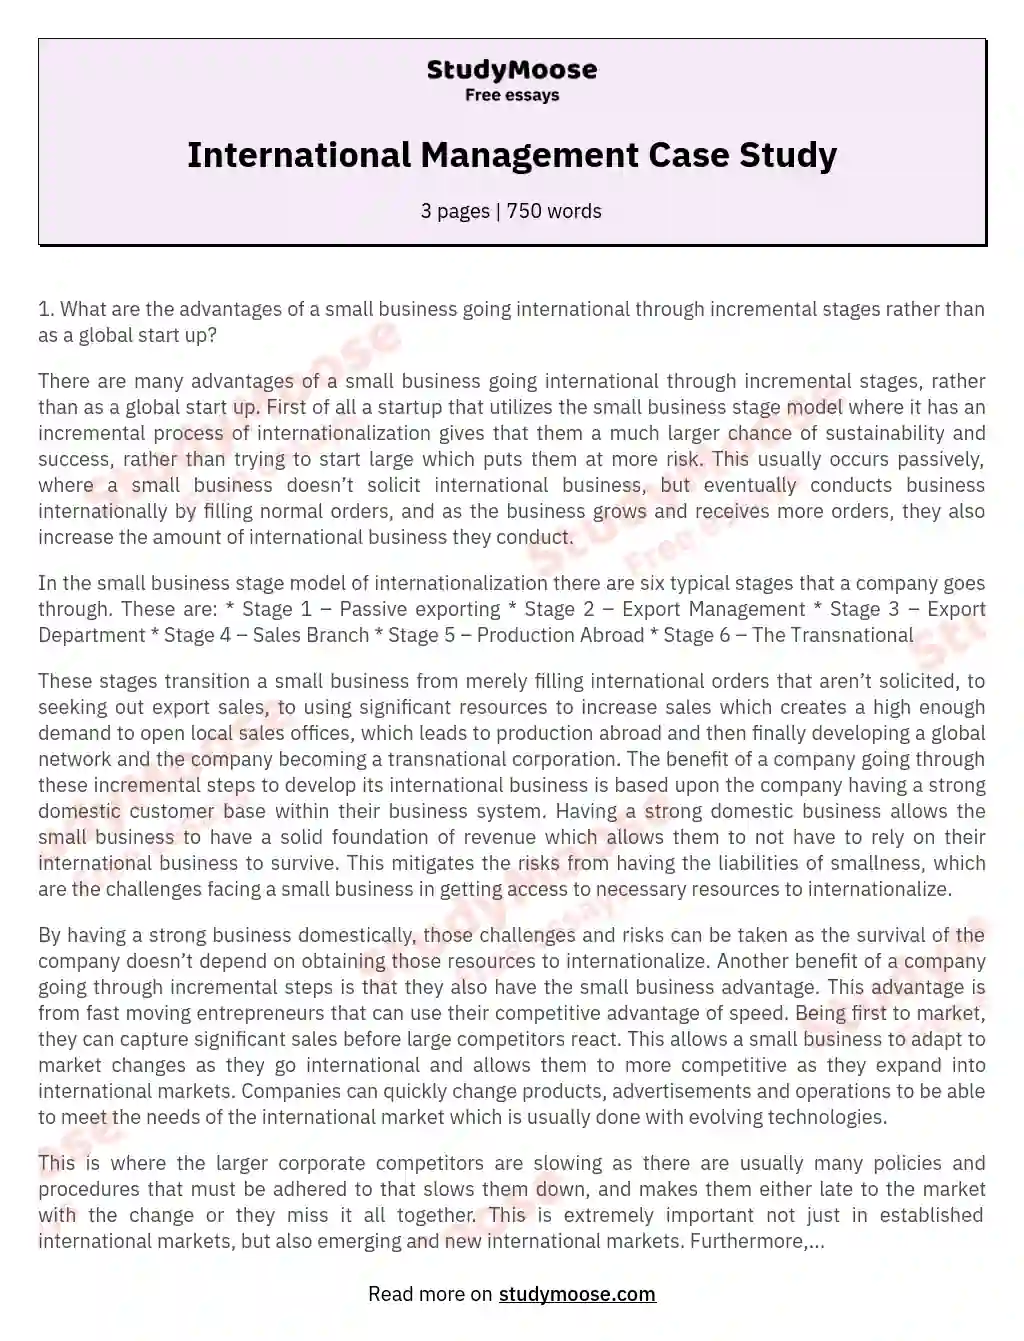 International Management Case Study essay